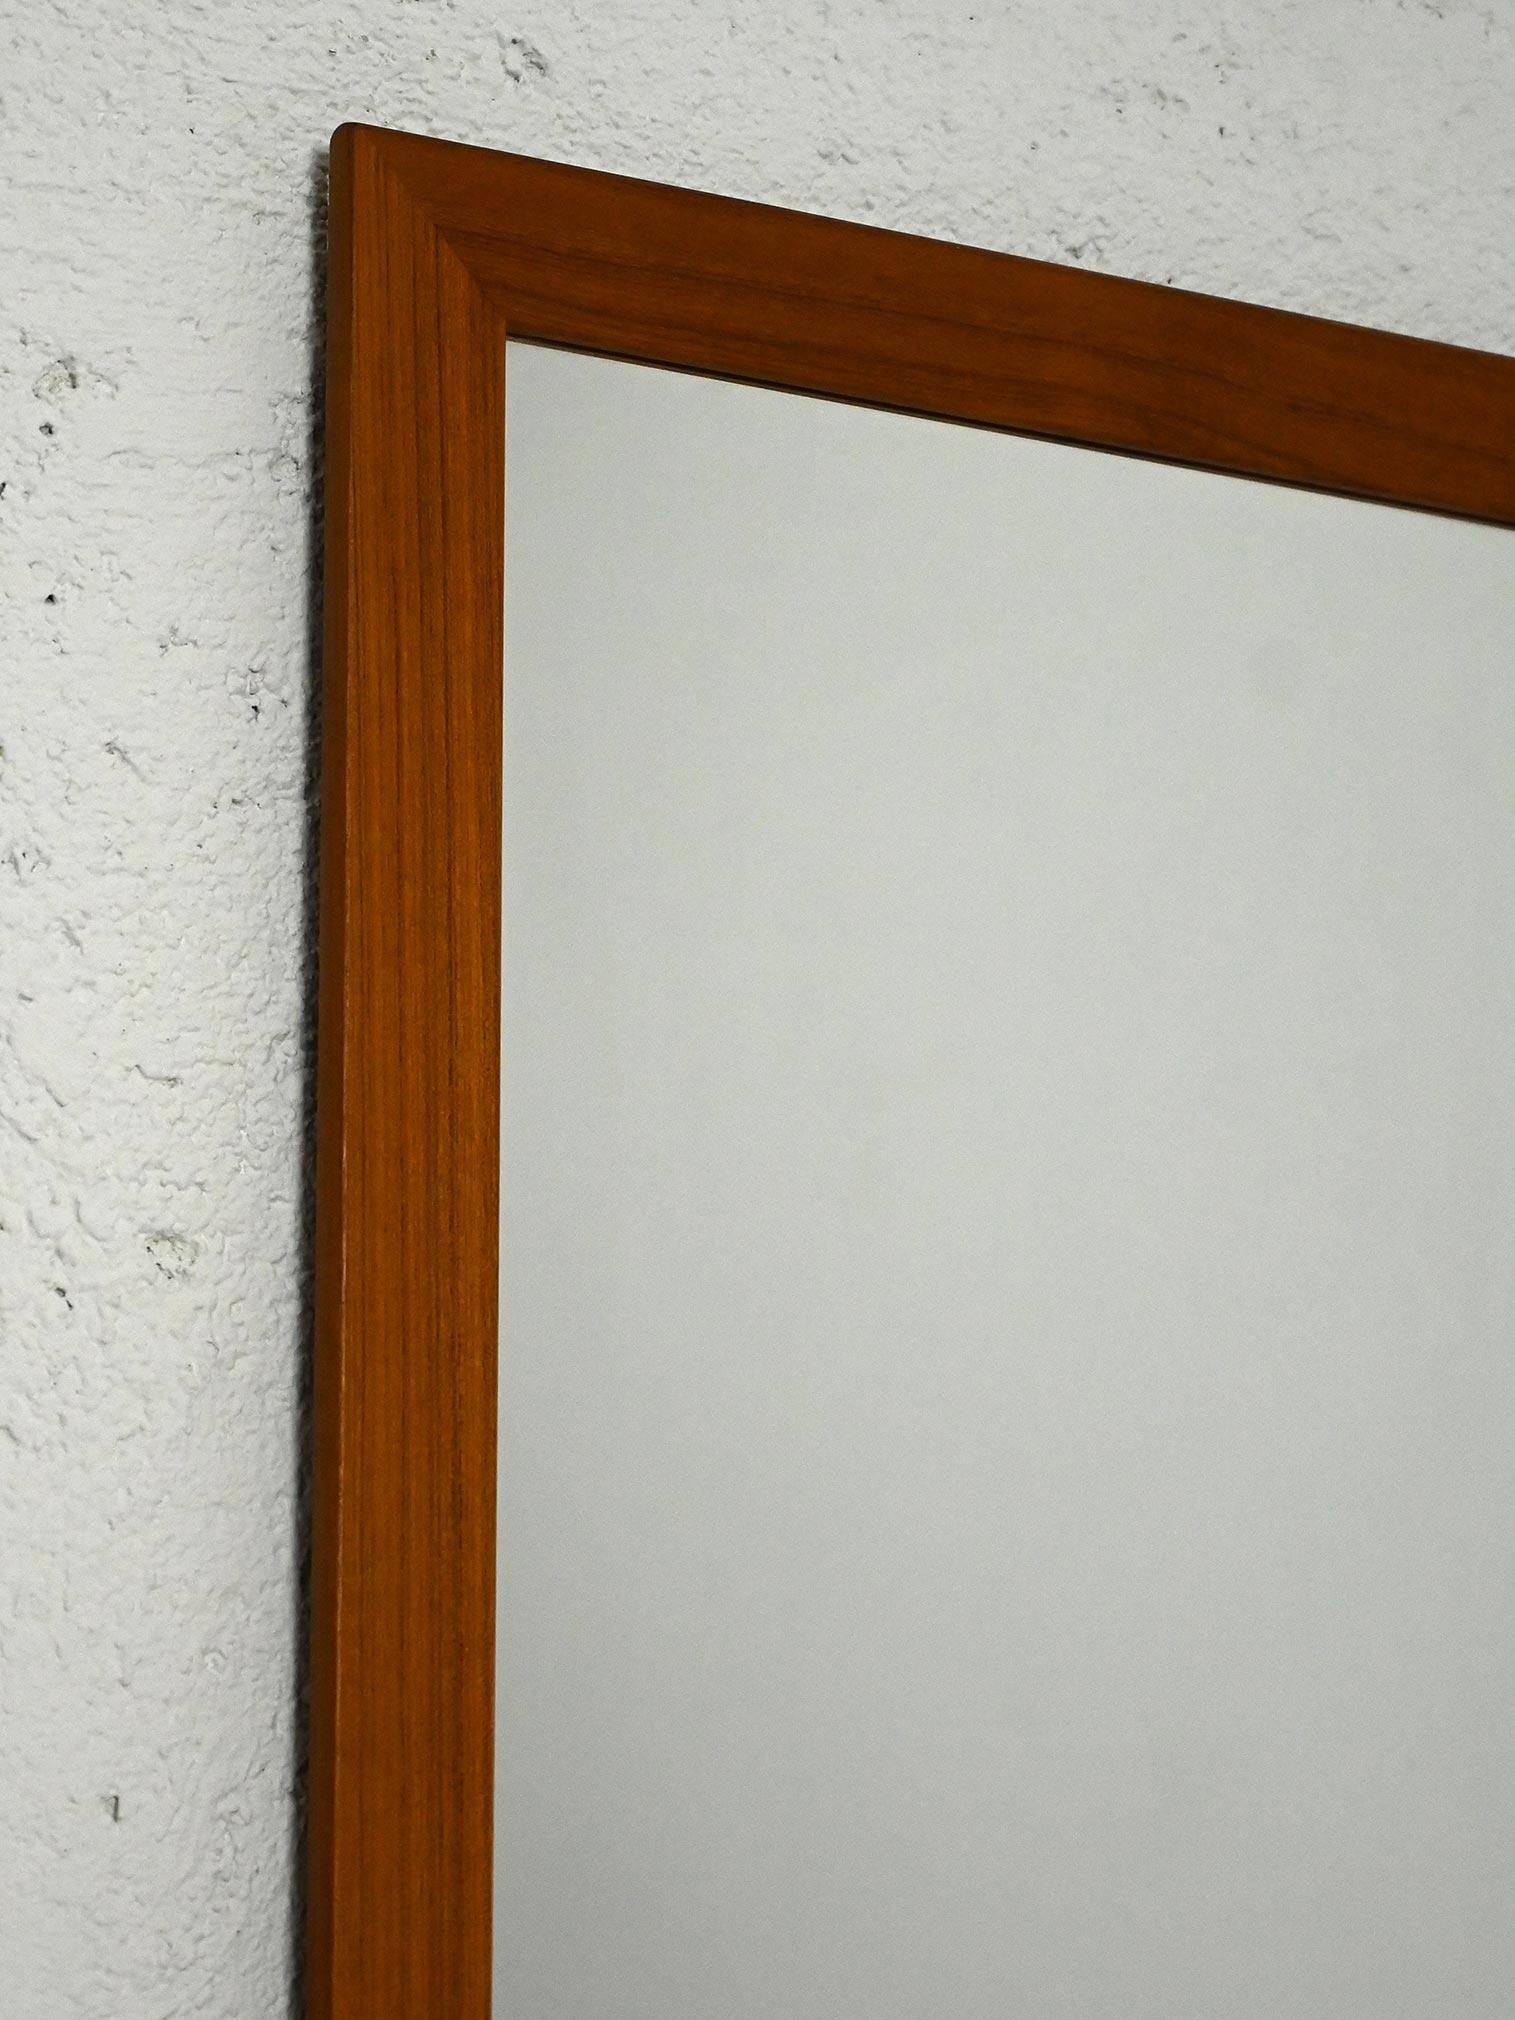 Teak framed mirror In Good Condition For Sale In Brescia, IT